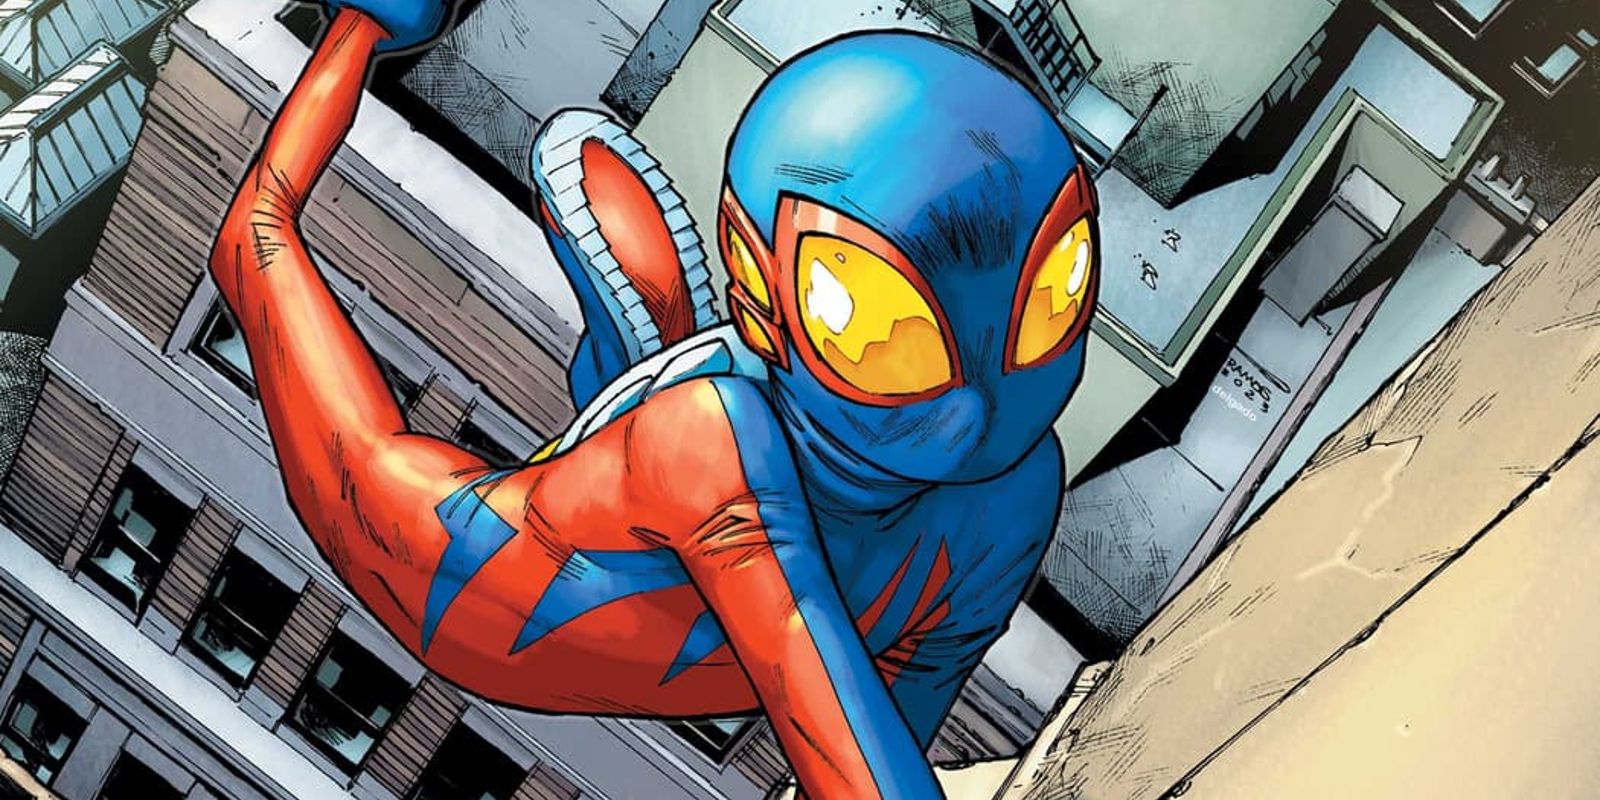 Bailey Briggs, aka Spider-Boy, swinging through New York City in Marvel Comics